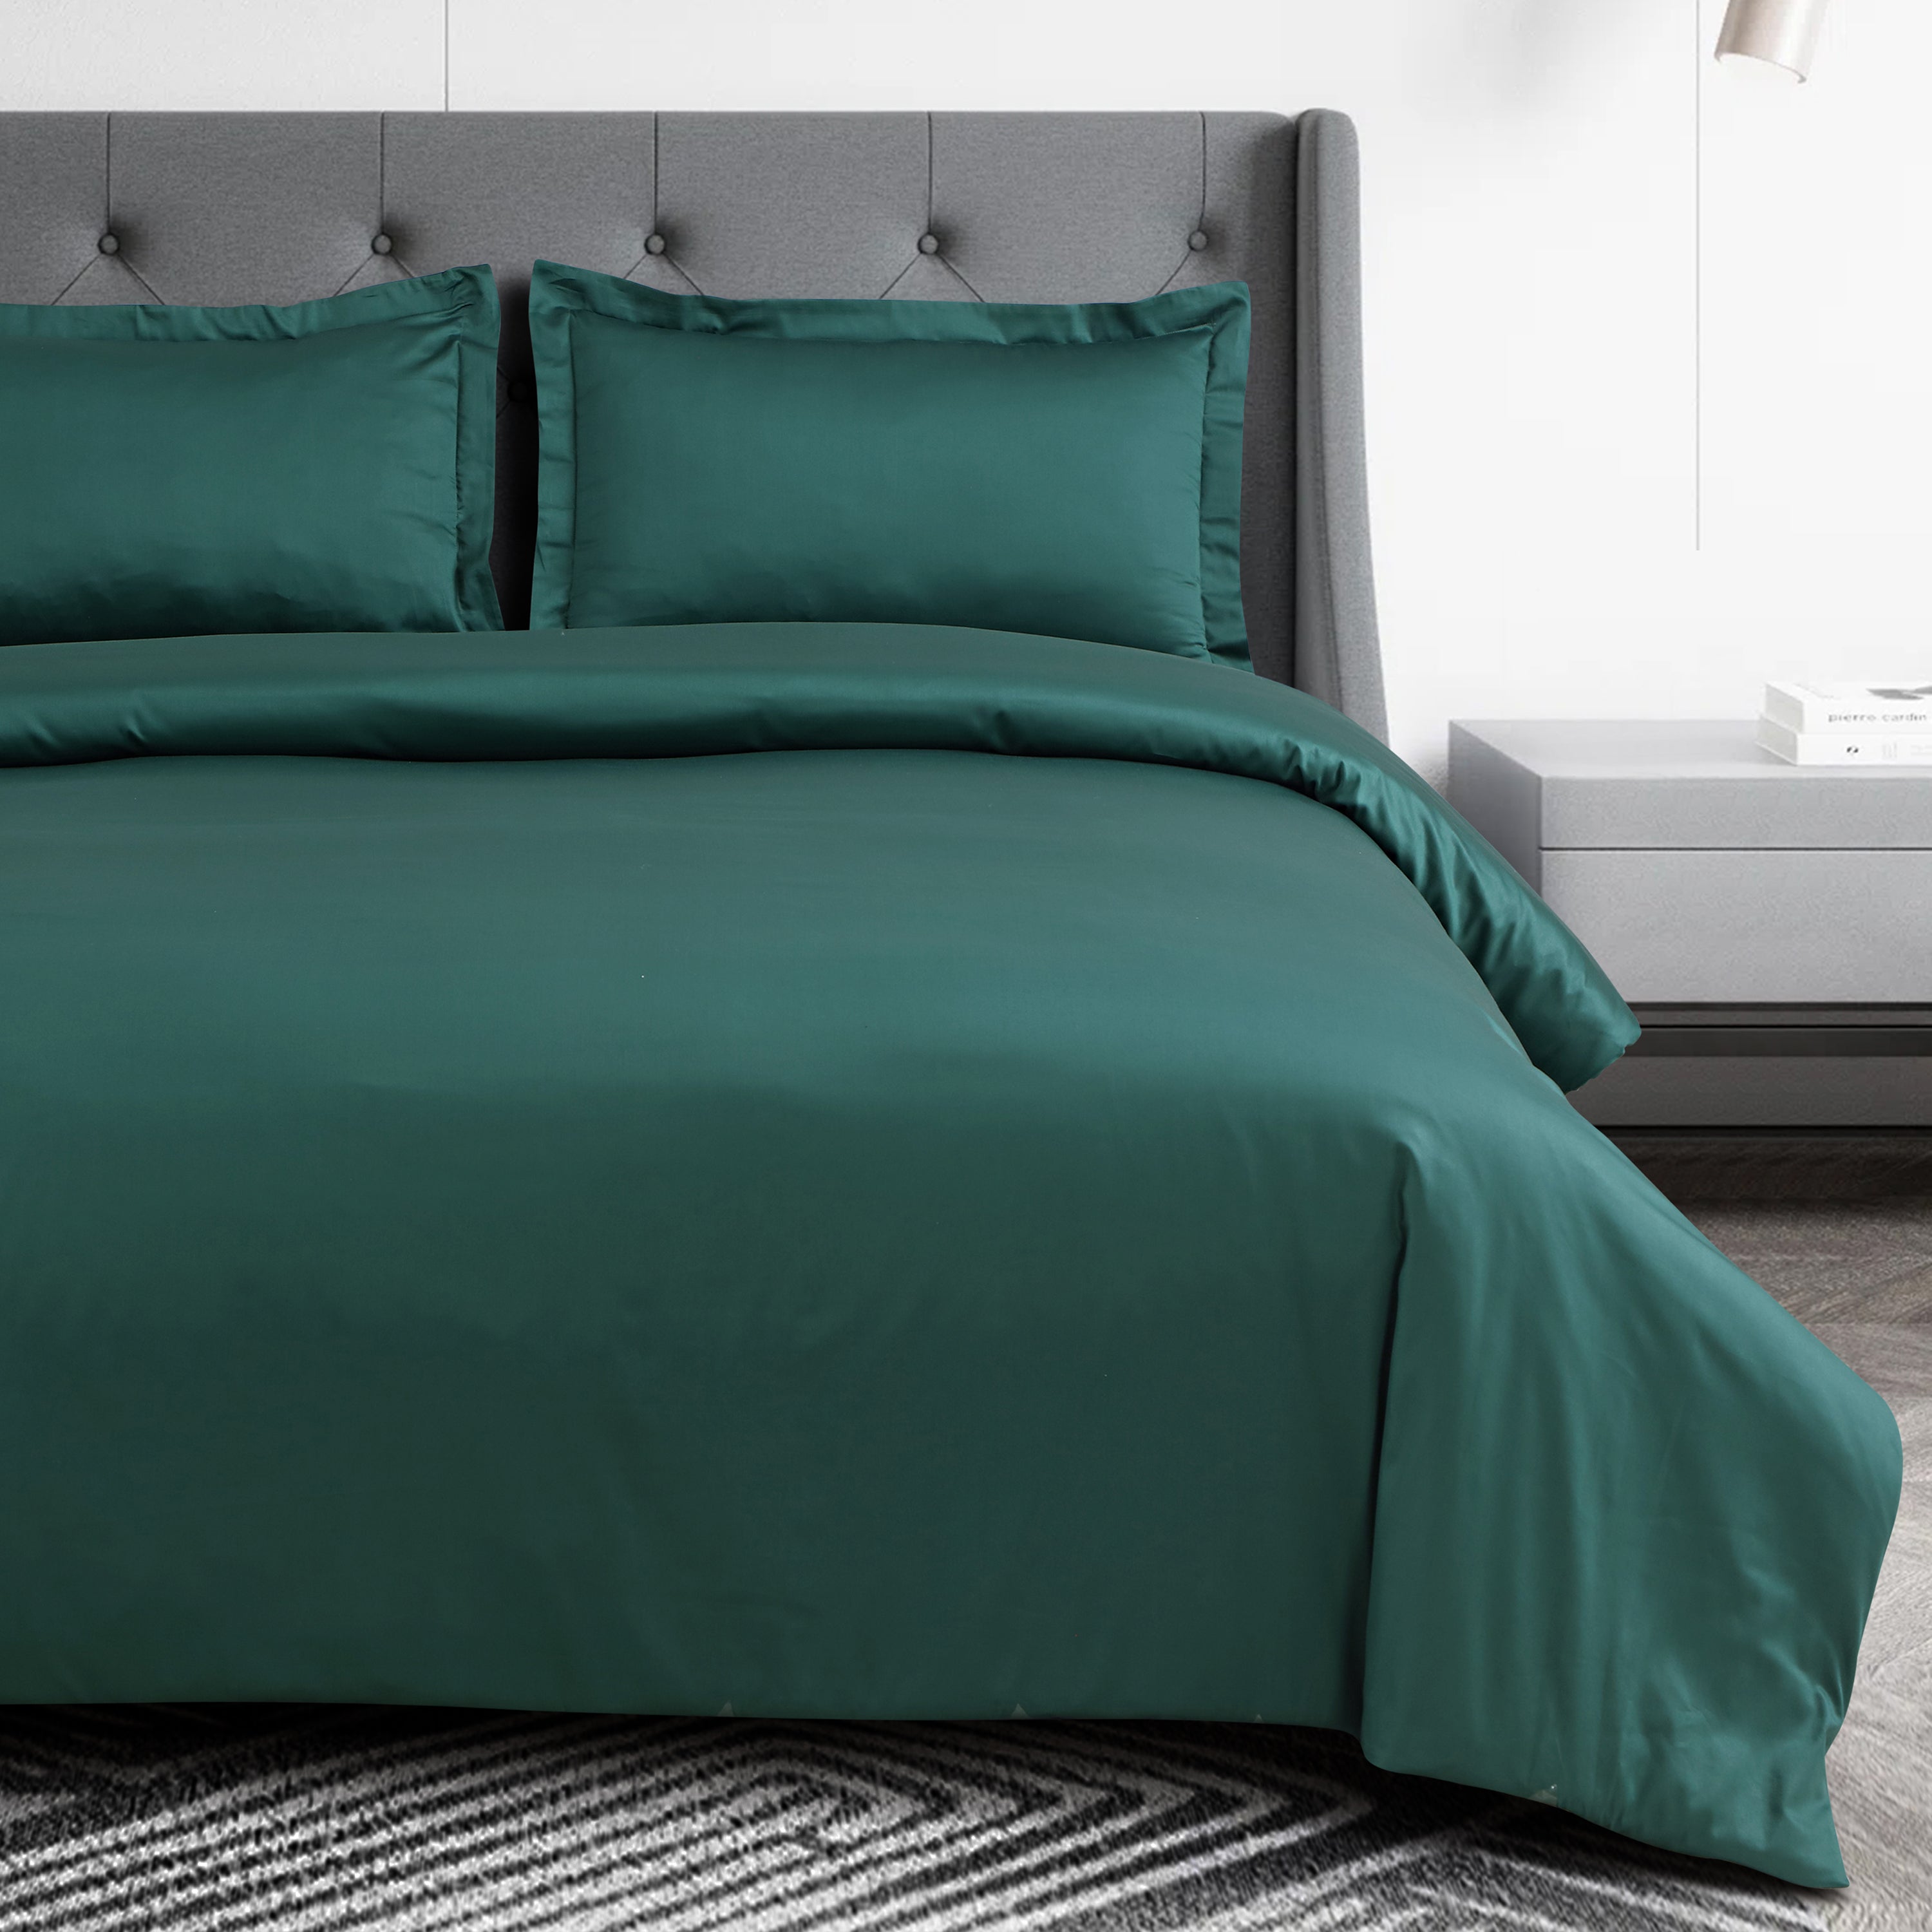 Vibrant Solid Green Bedsheet